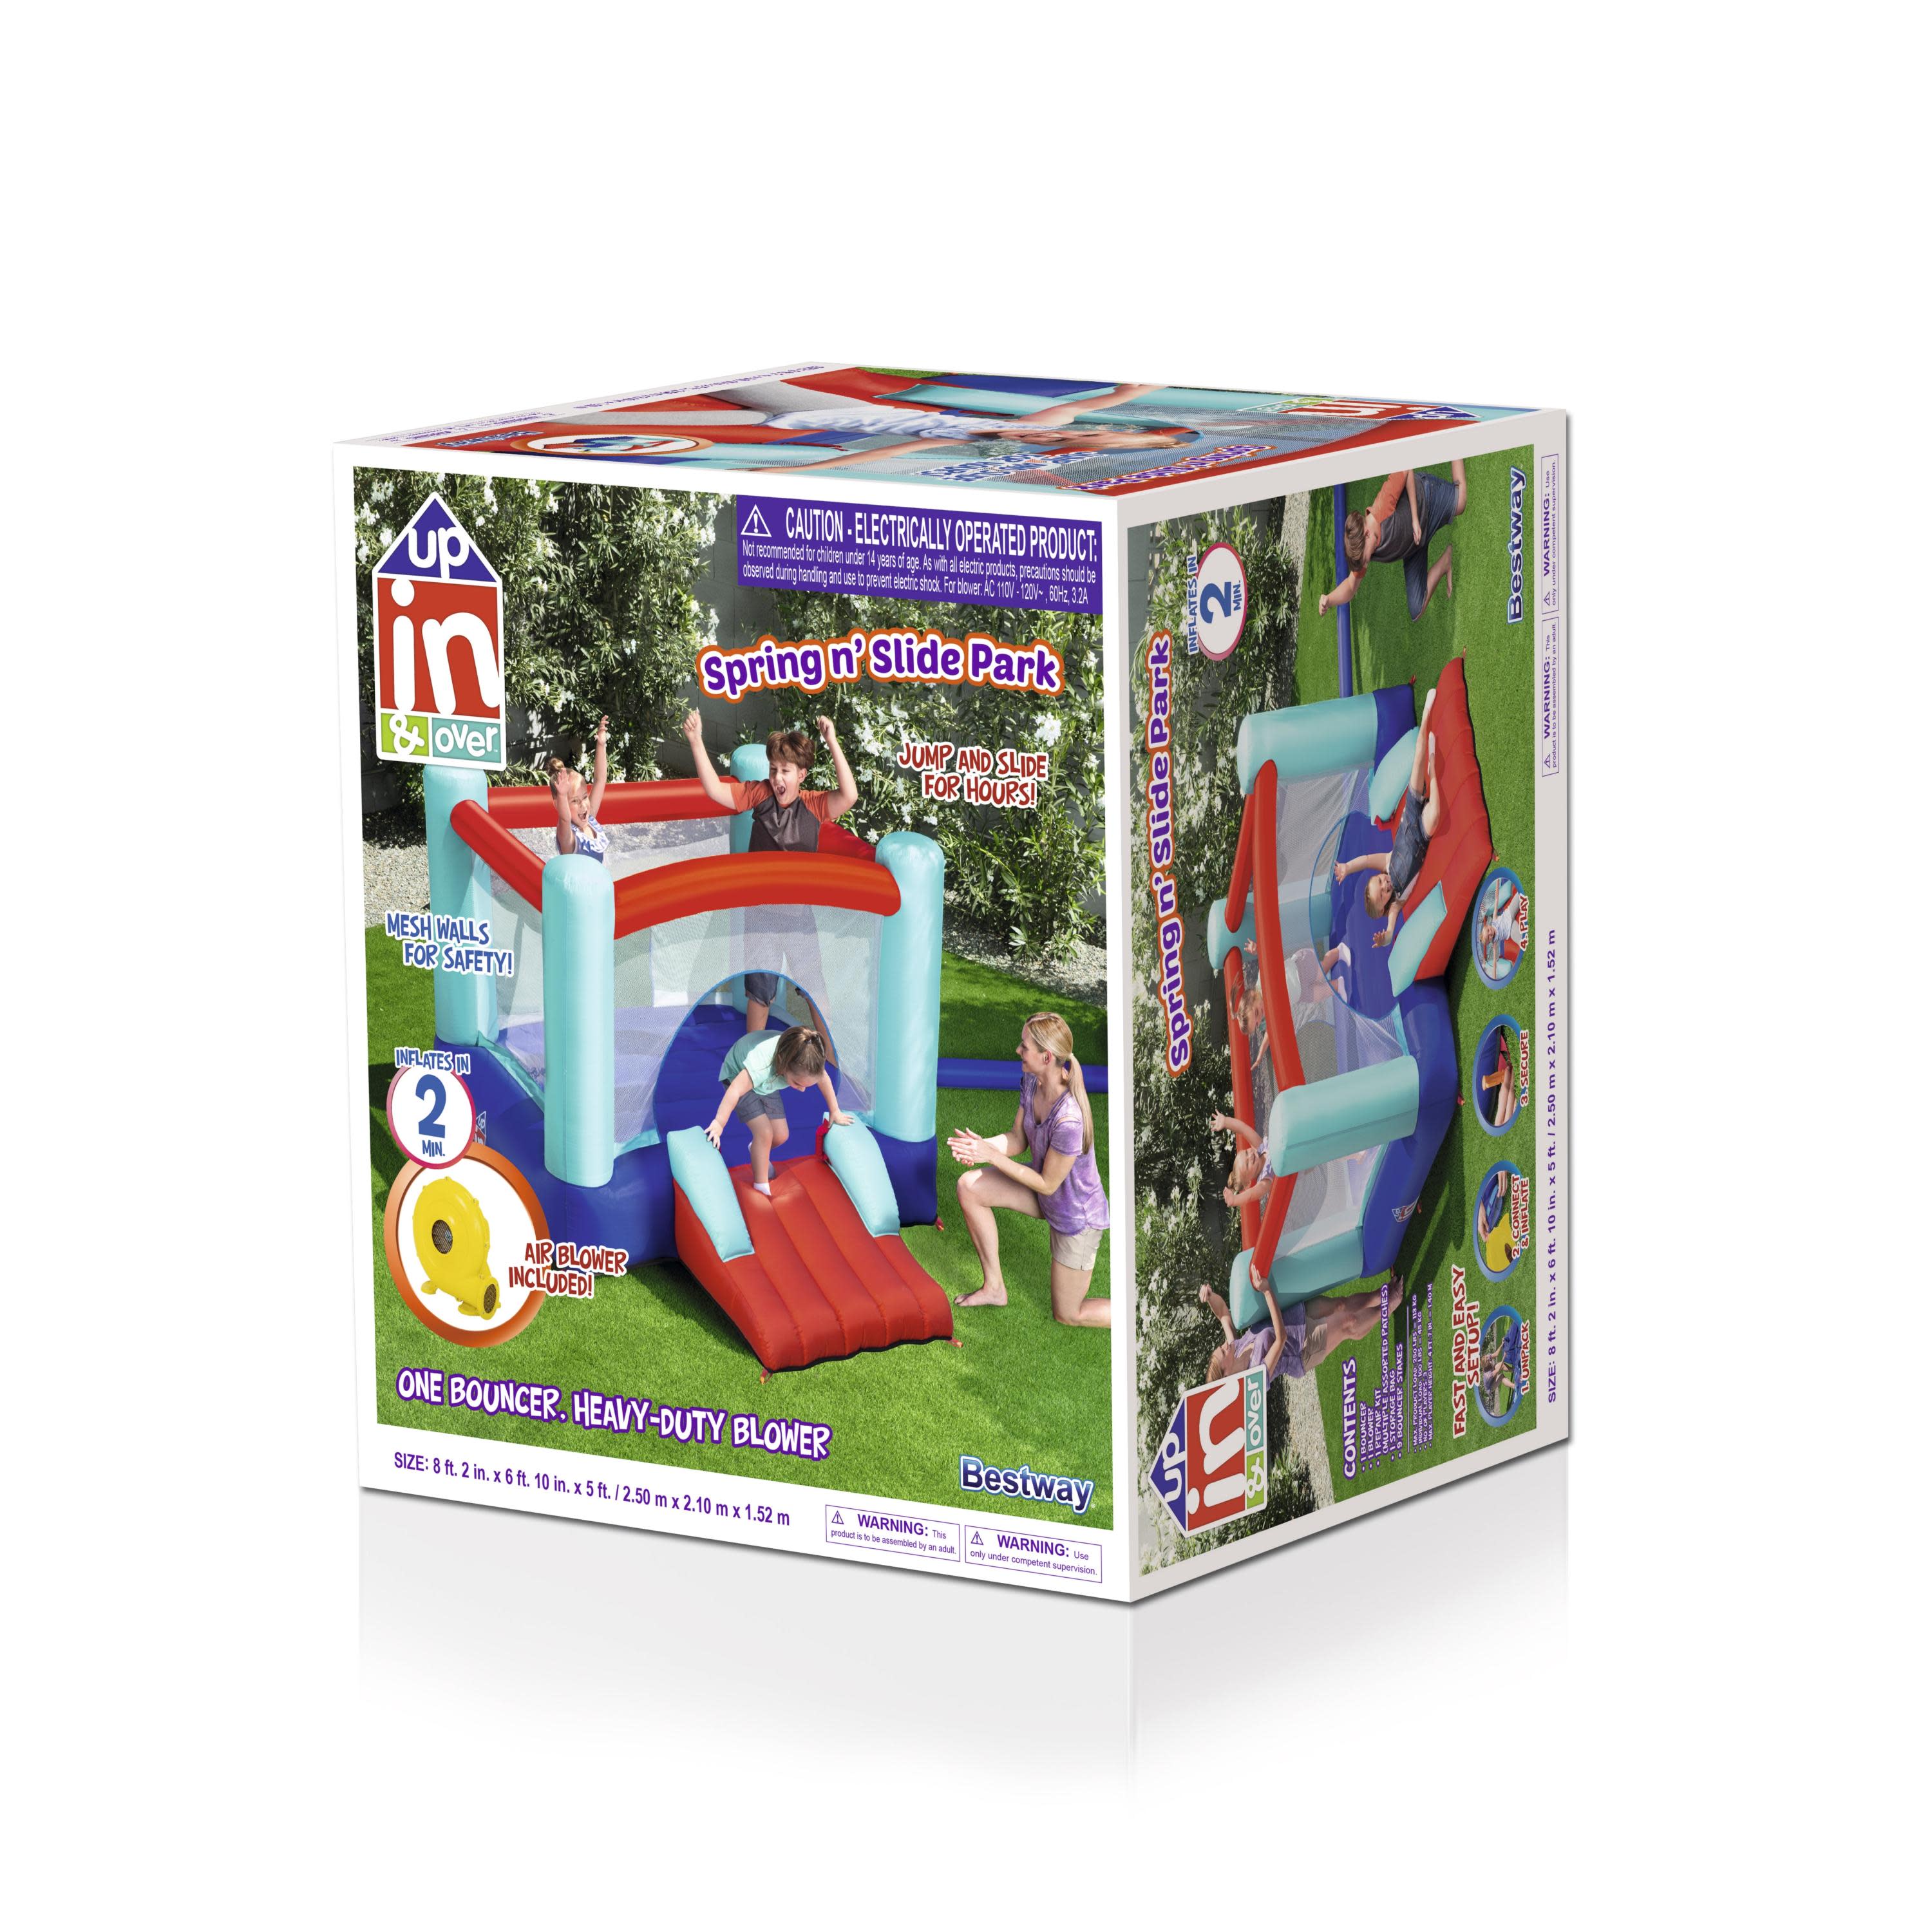 Bestway Spring 'n Slide Park Inflatable Bounce House - image 3 of 17